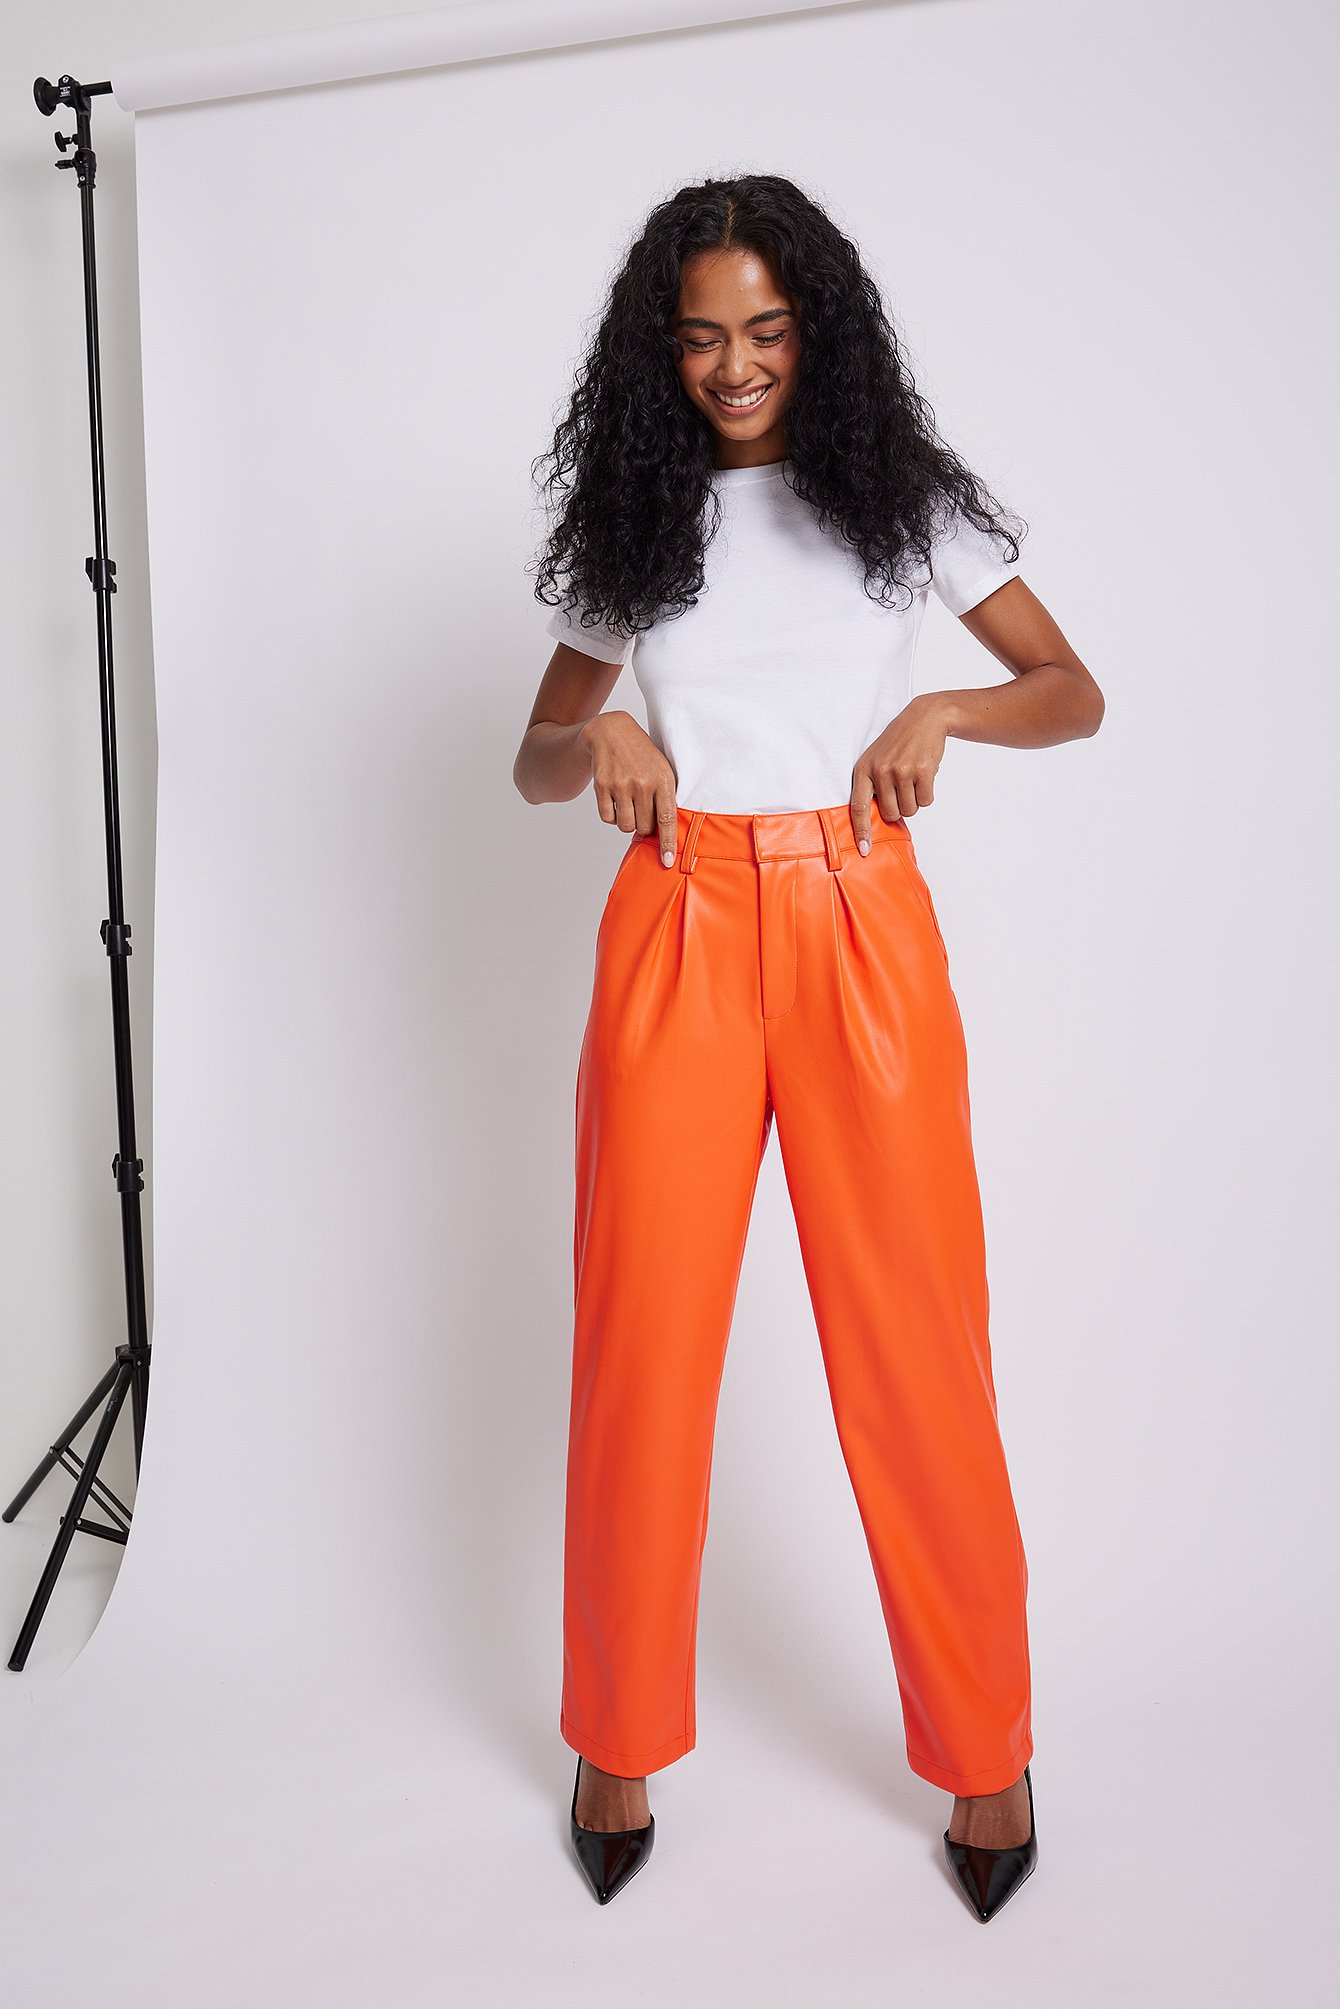 BODEN Melina Paperbag Trousers HOT ORANGE Size UK 12P BRAND NEW T0106 | eBay